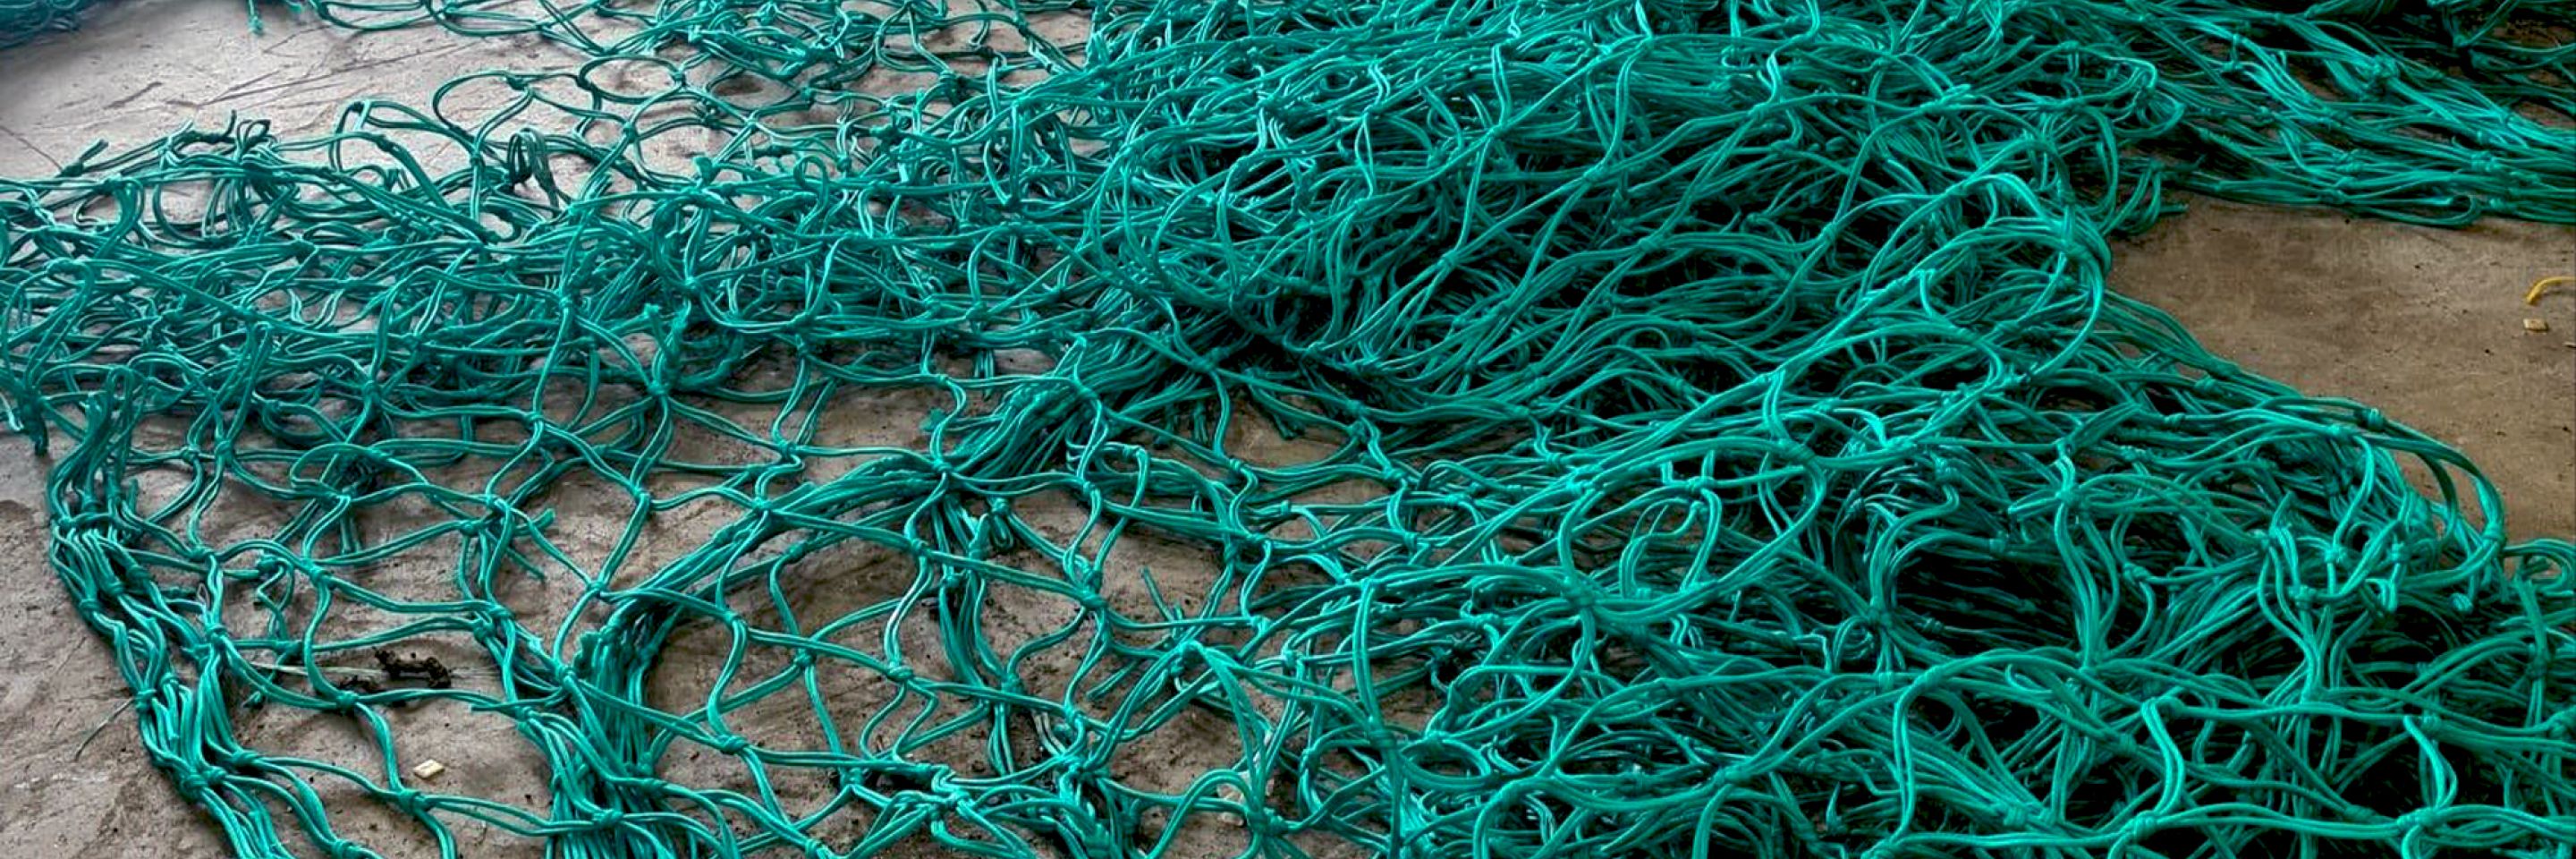 Plastic fish net